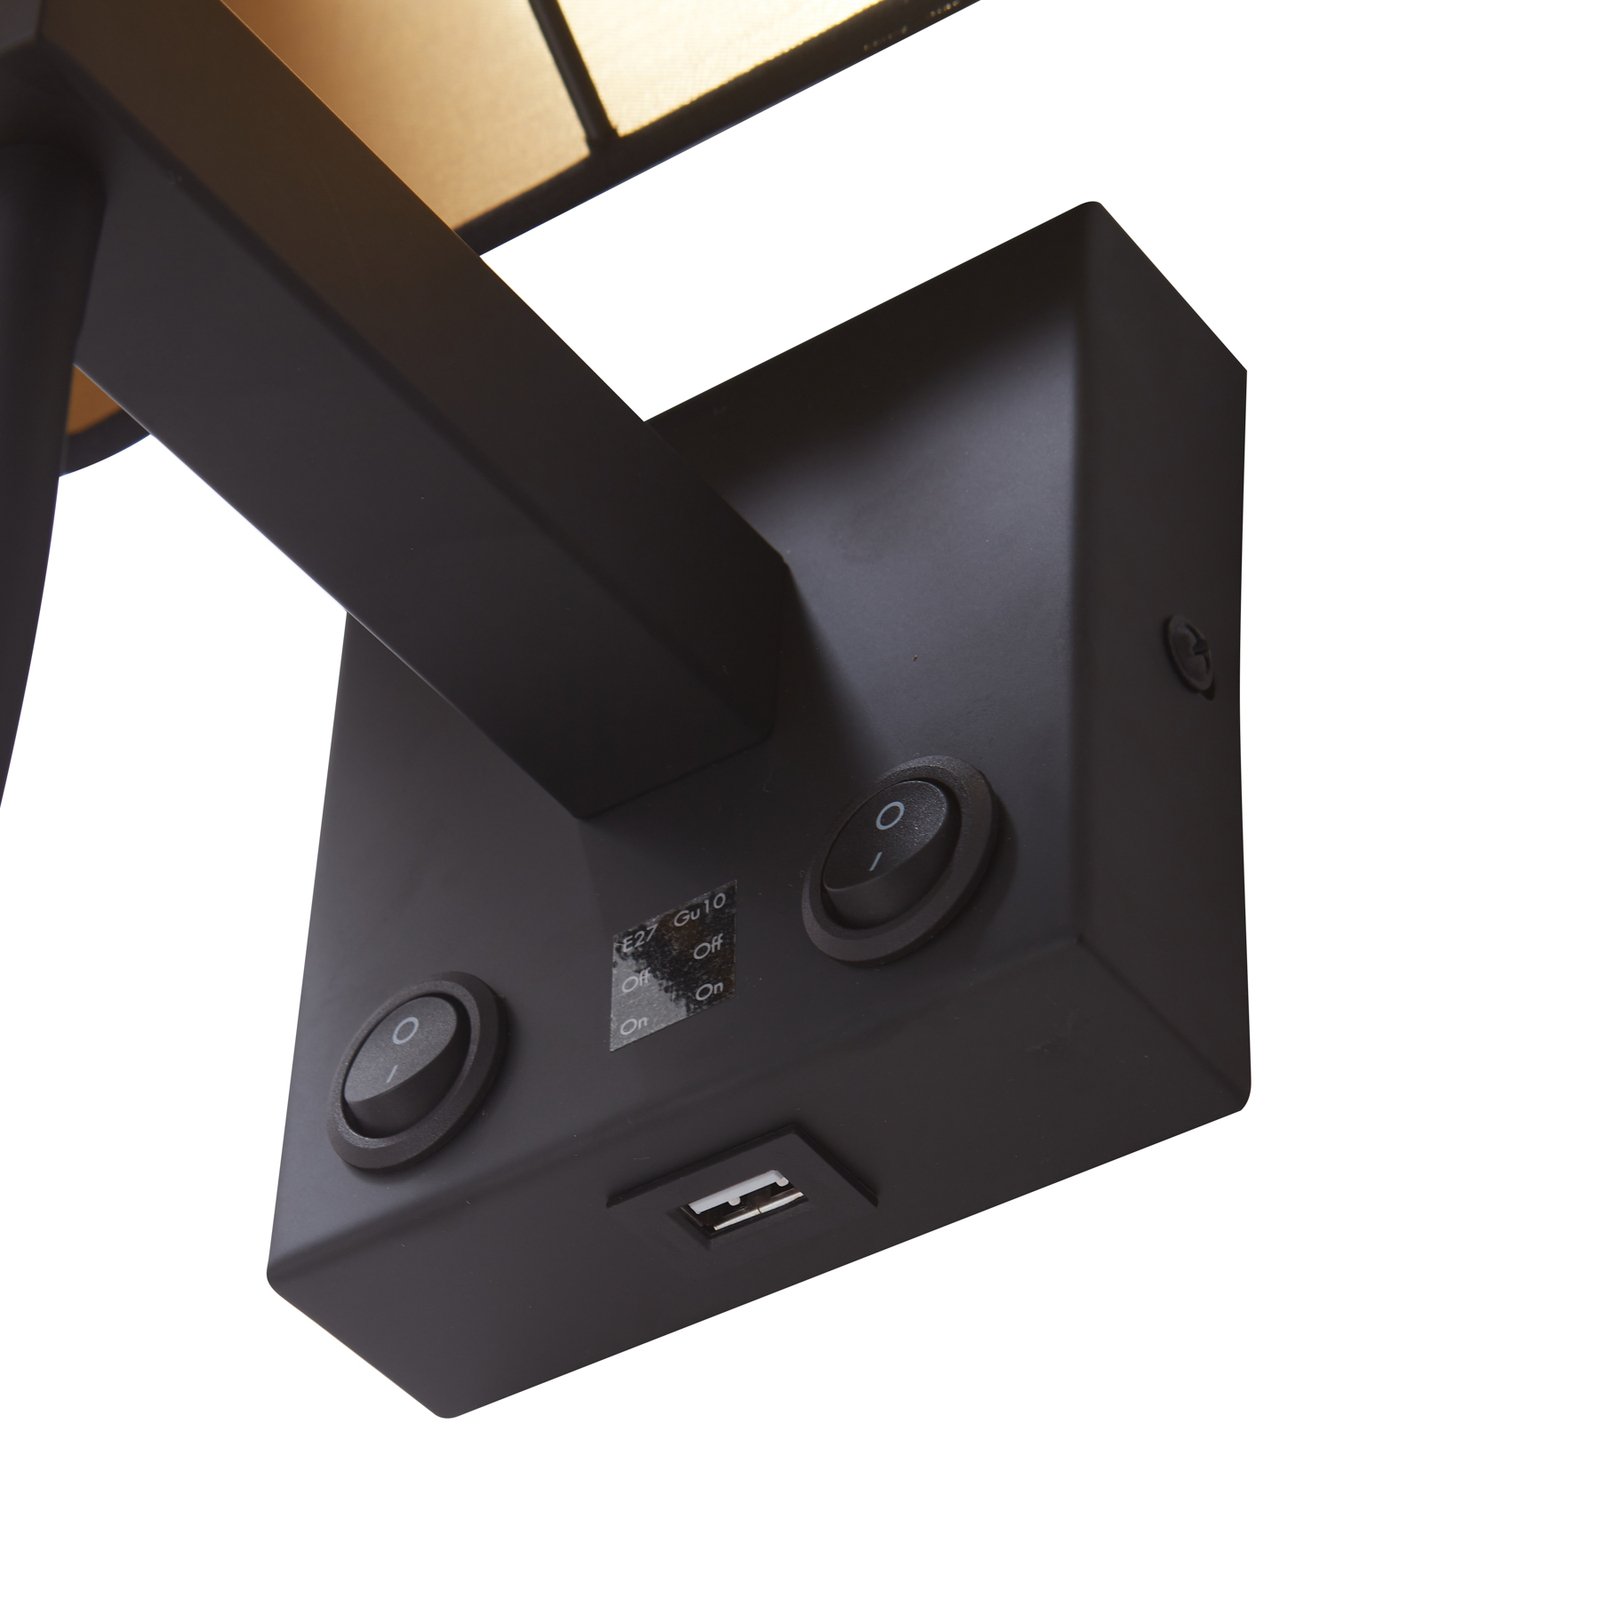 Lindby wall light Thorid, black/gold, fabric, USB, flex arm